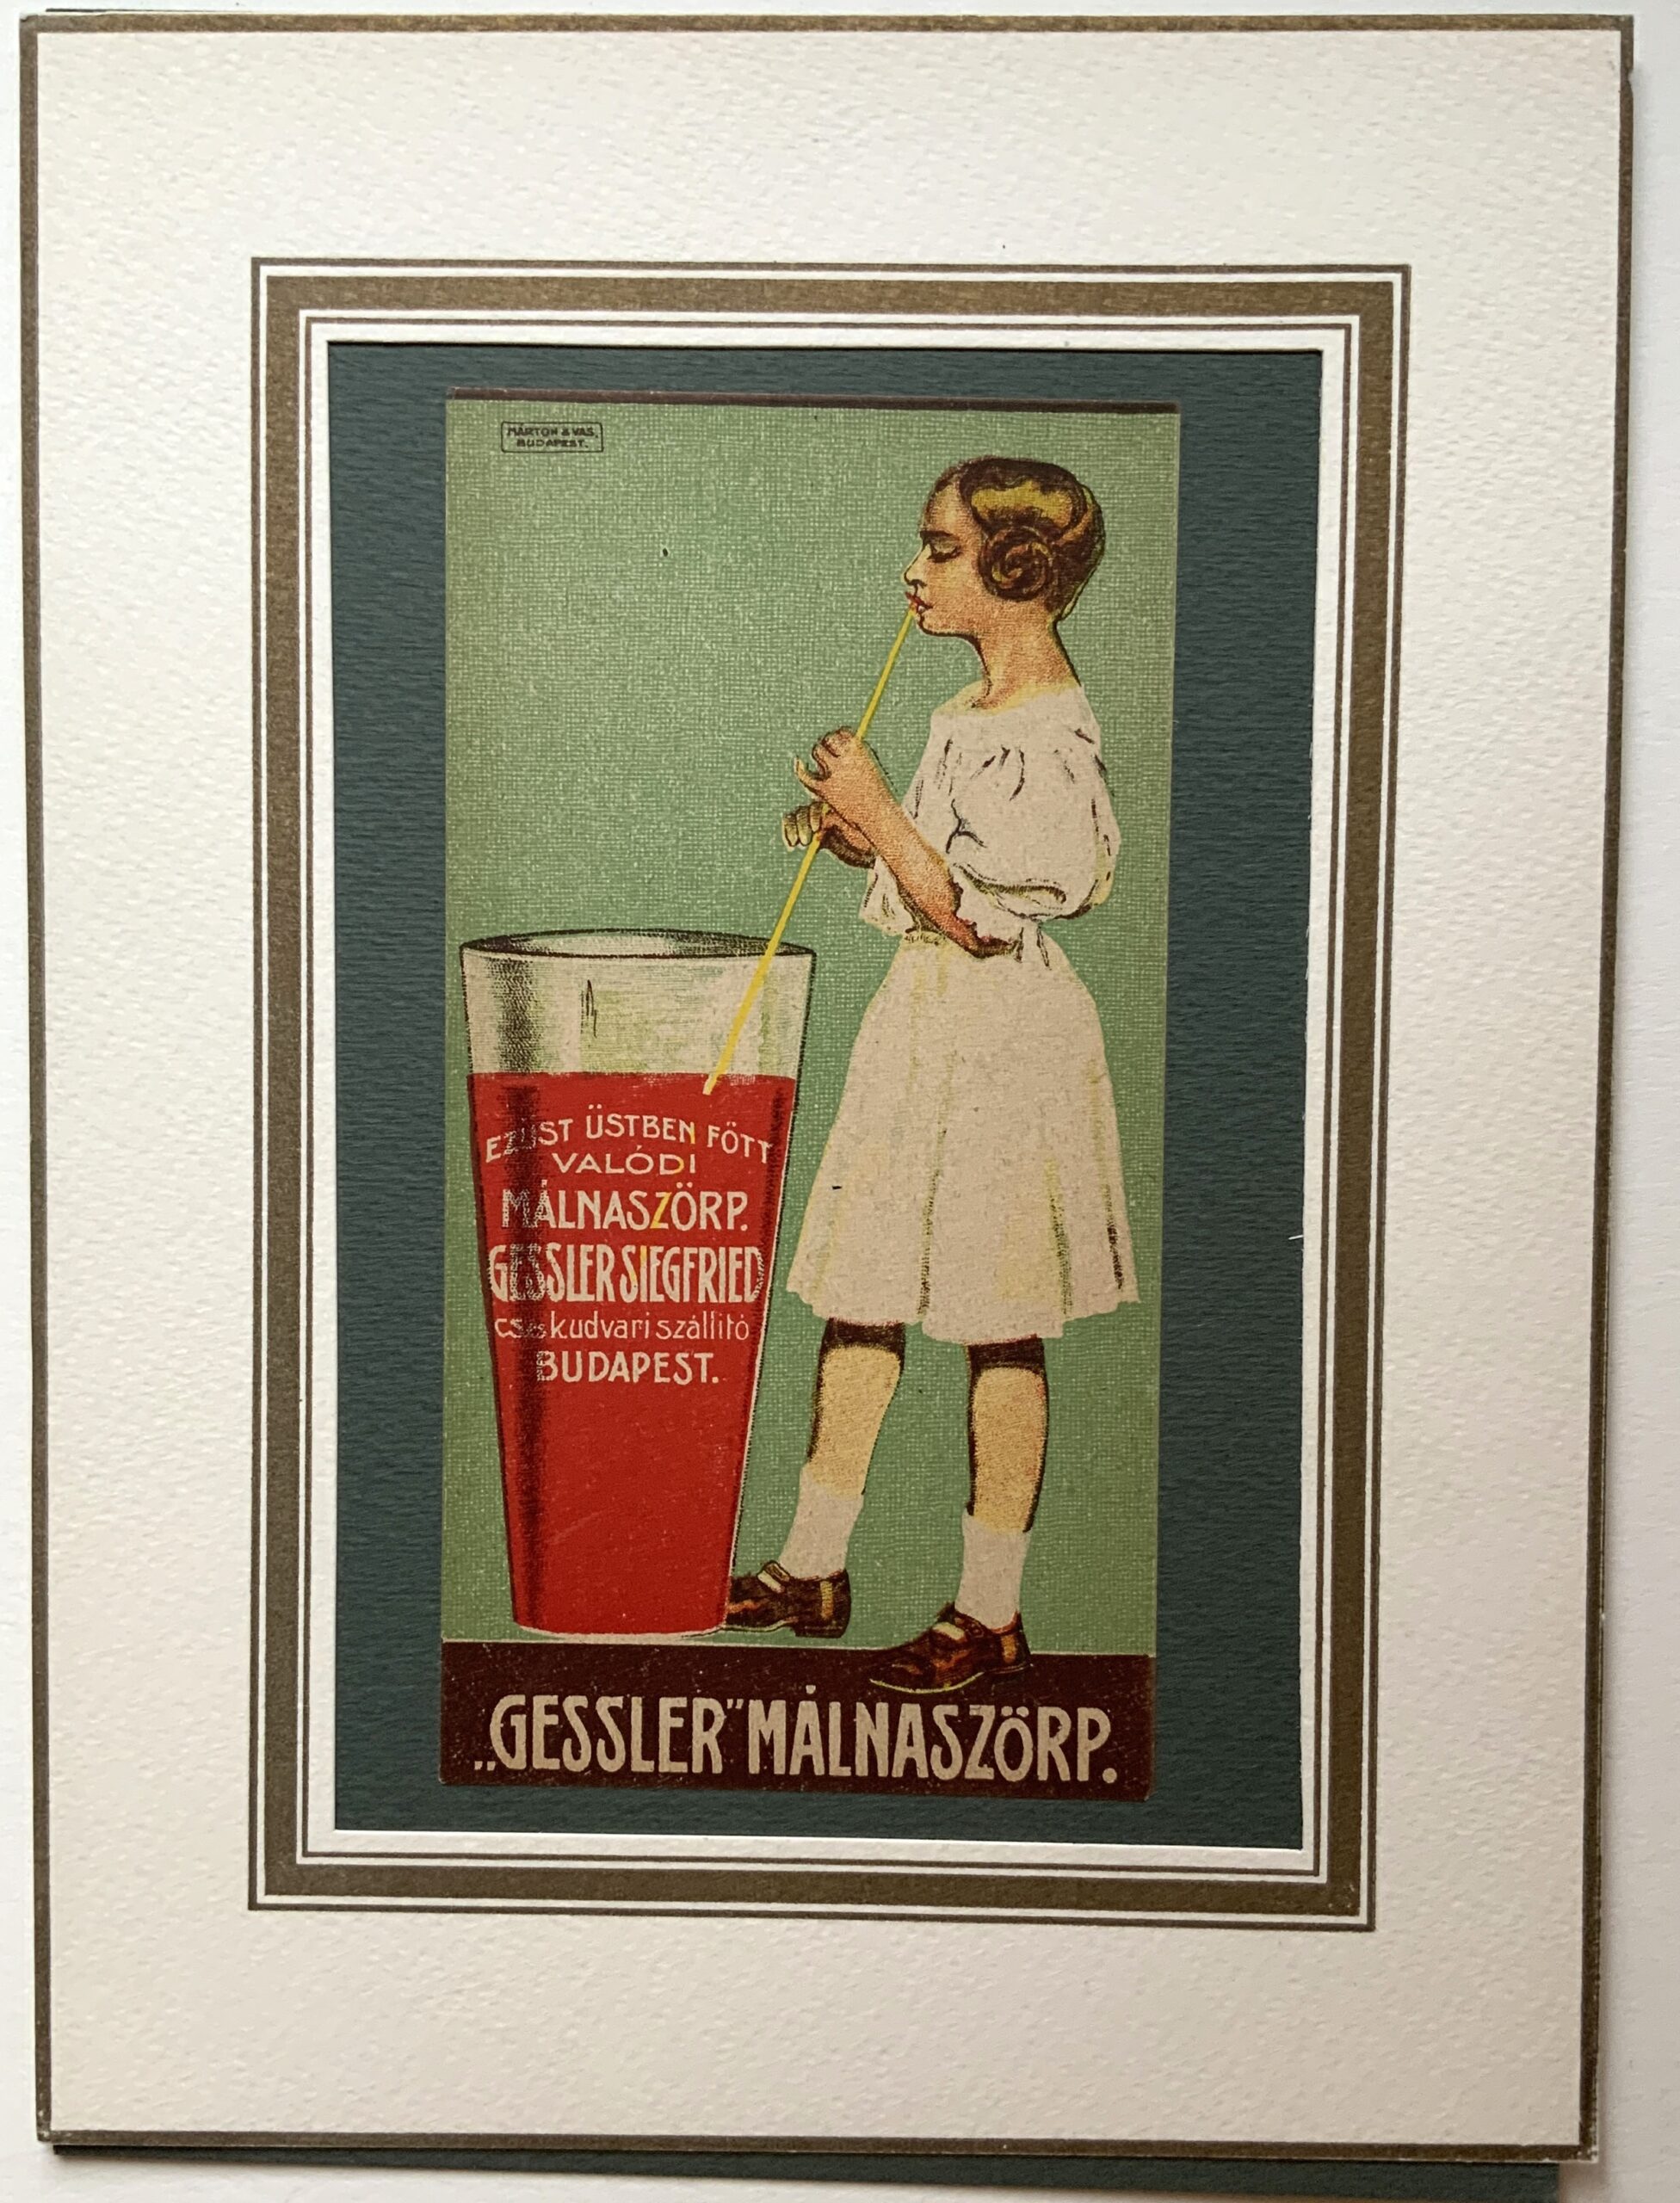 M444	GESSLER MALNASZORP - CA. 1910 HUNGARIAN POSTER GIRL WITH GIANT DRINK ADVERTISEMENT